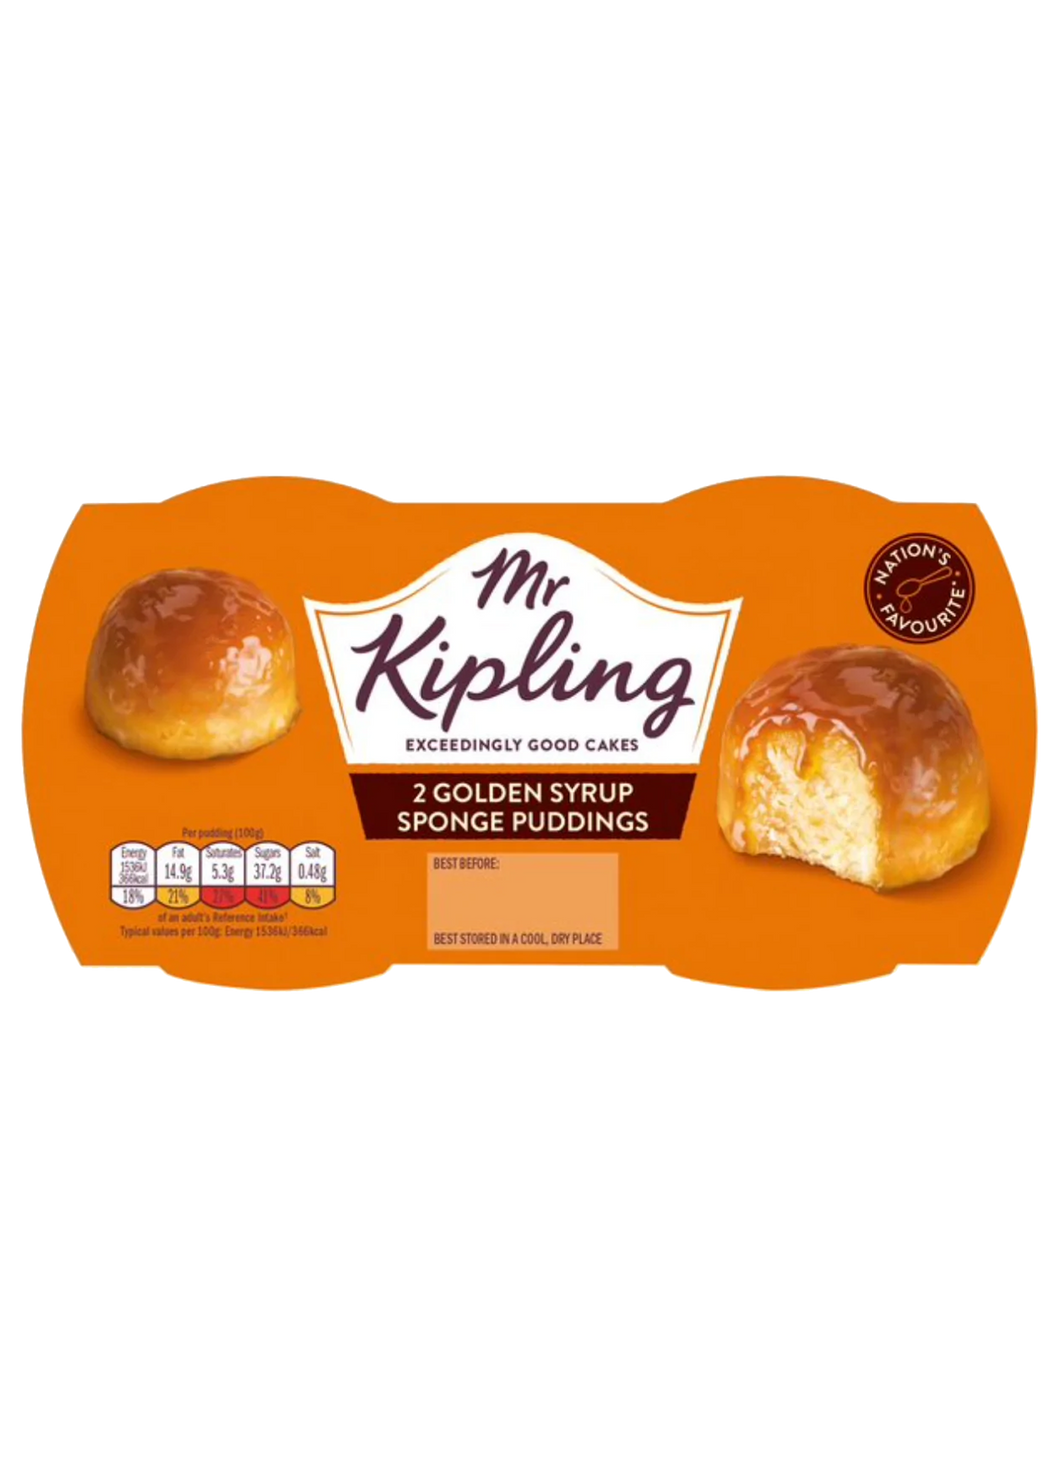 Mr Kipling Exceedingly Good Cakes 2 Golden Syrup Sponge Puddings 190g